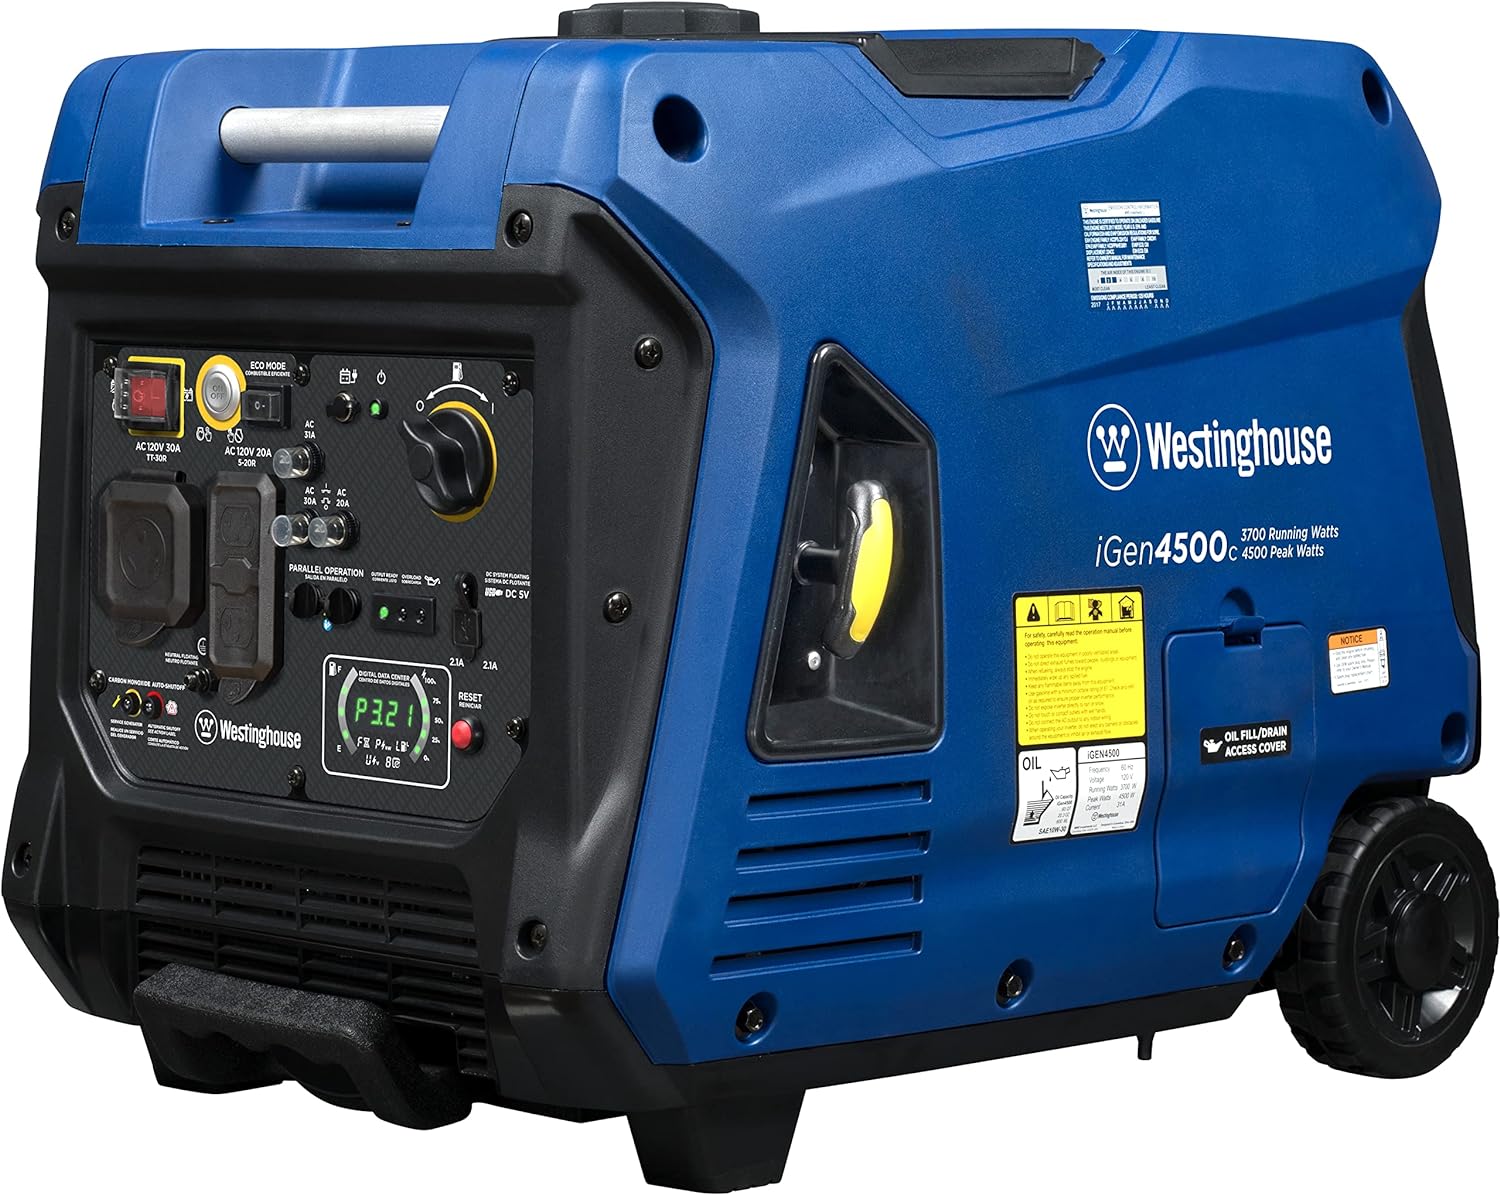 Westinghouse iGen4500c Inverter Generator 3700W/4500W 30 Amp Remote Start Gas with CO Sensor New